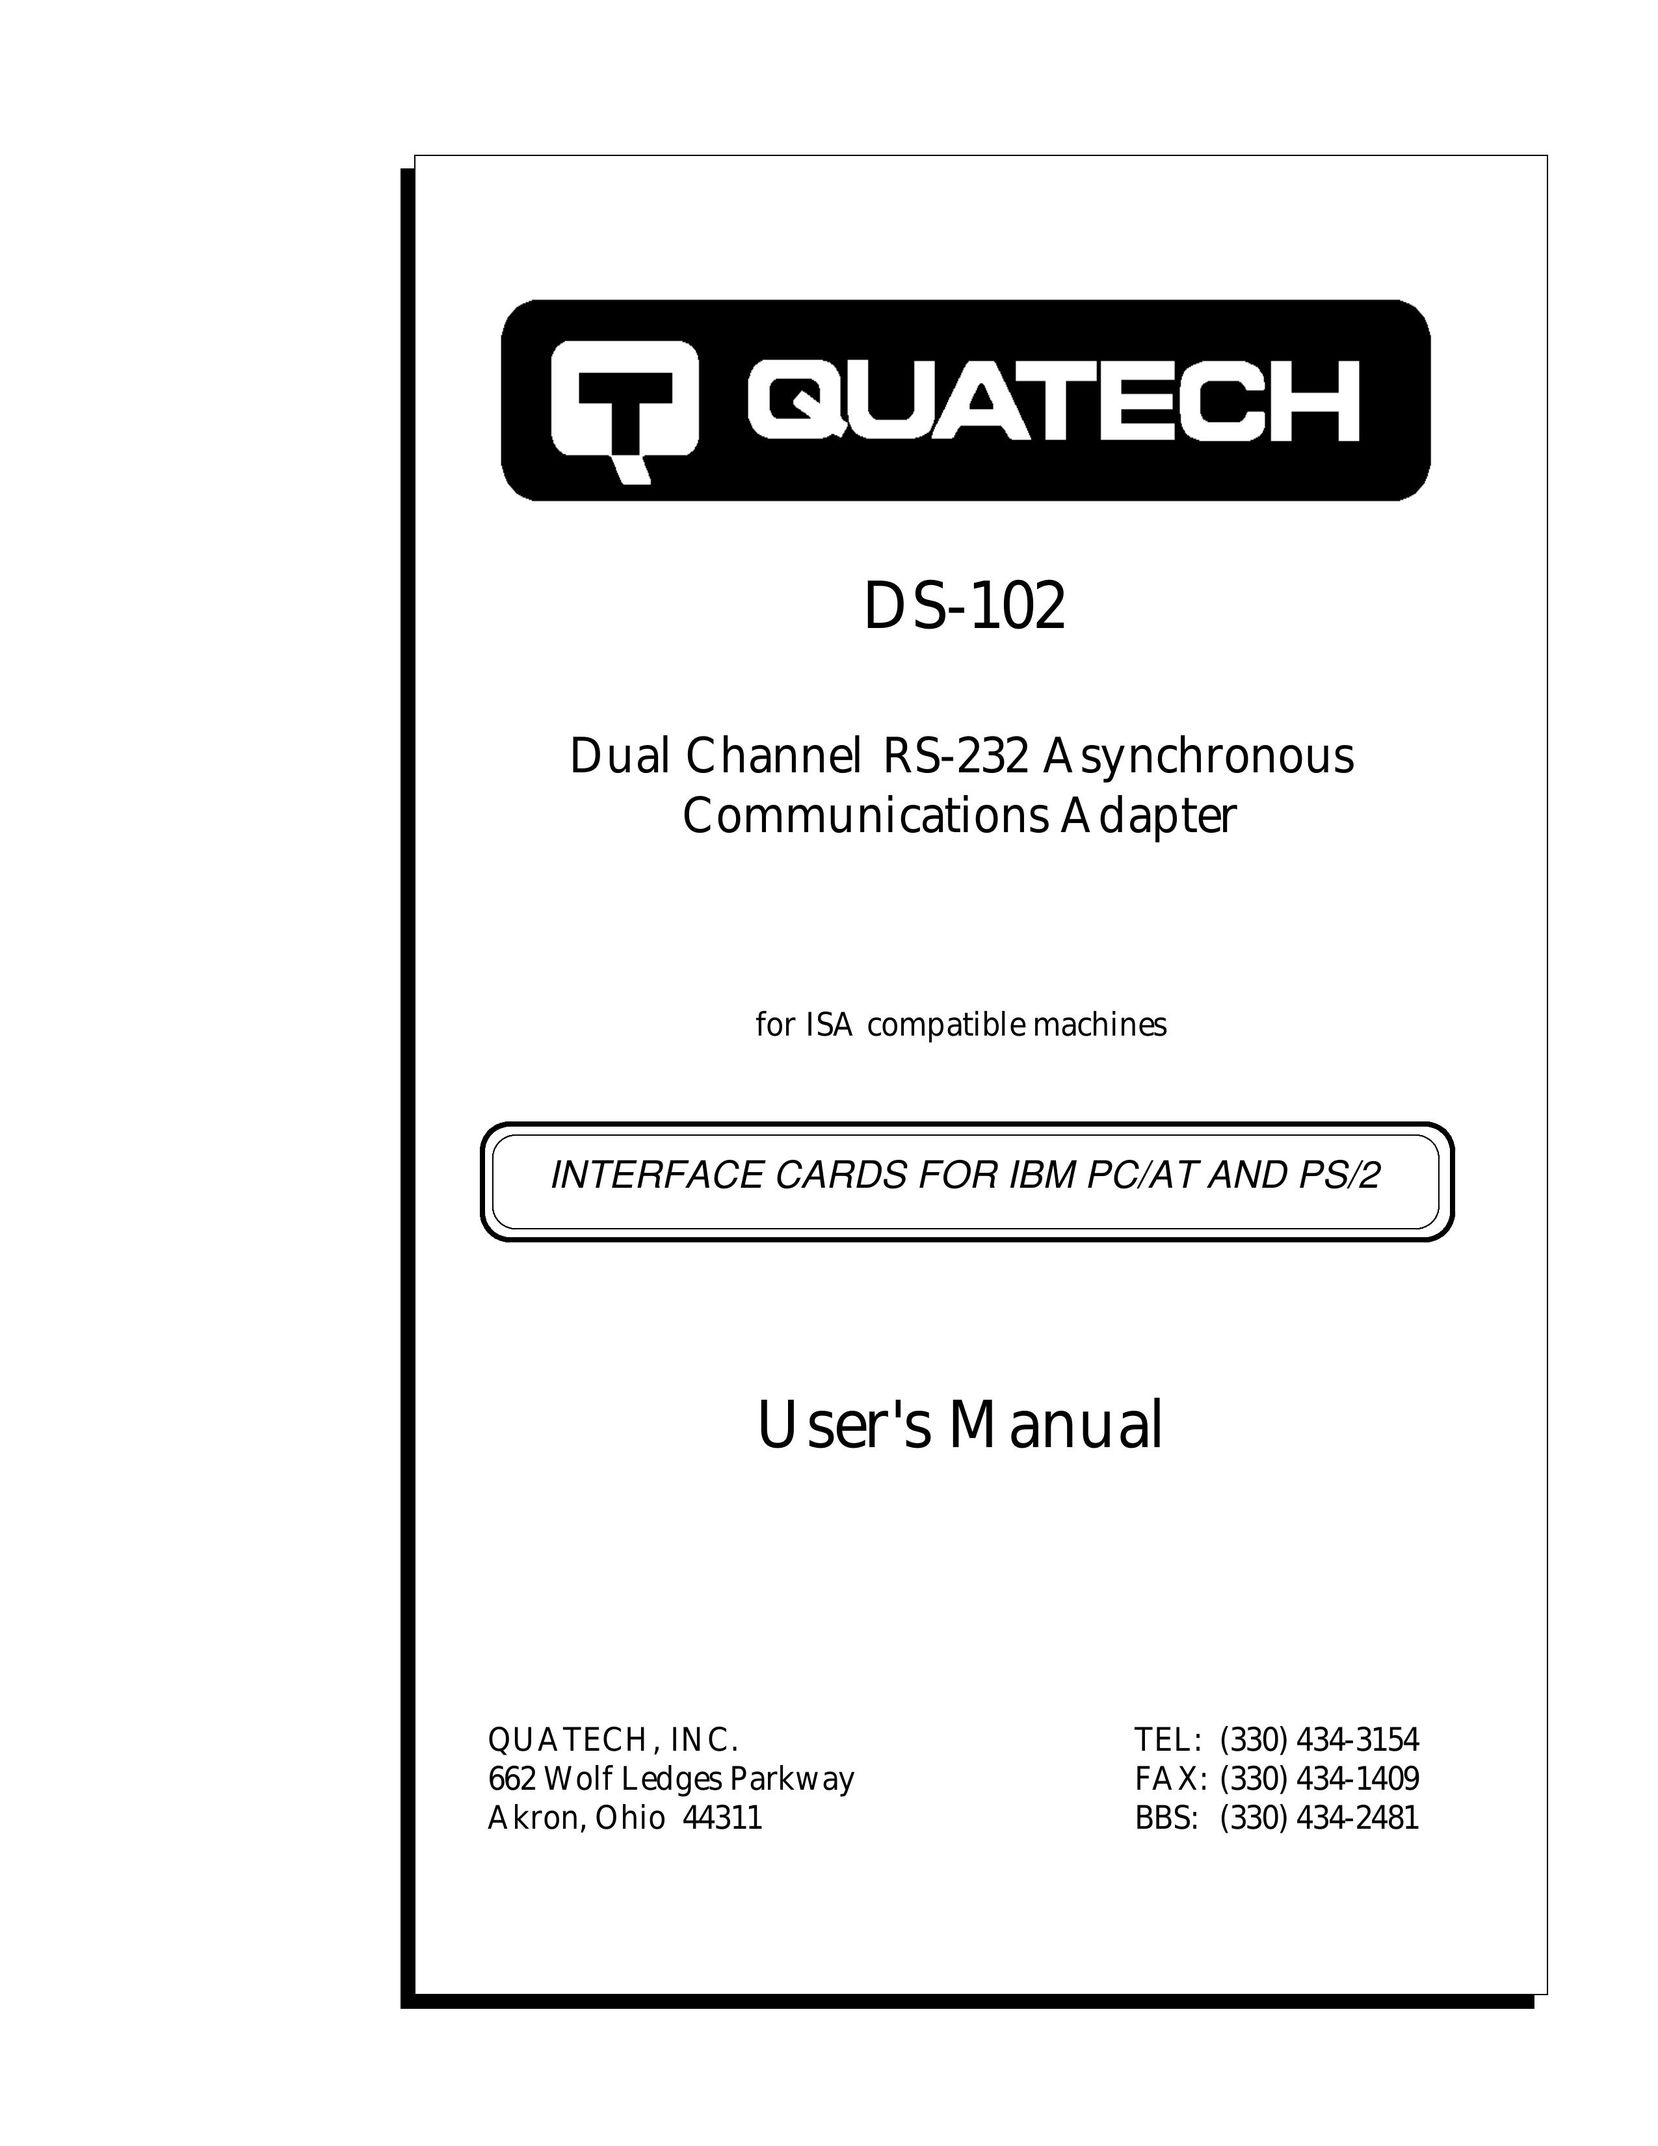 Quatech DS-102 Network Card User Manual